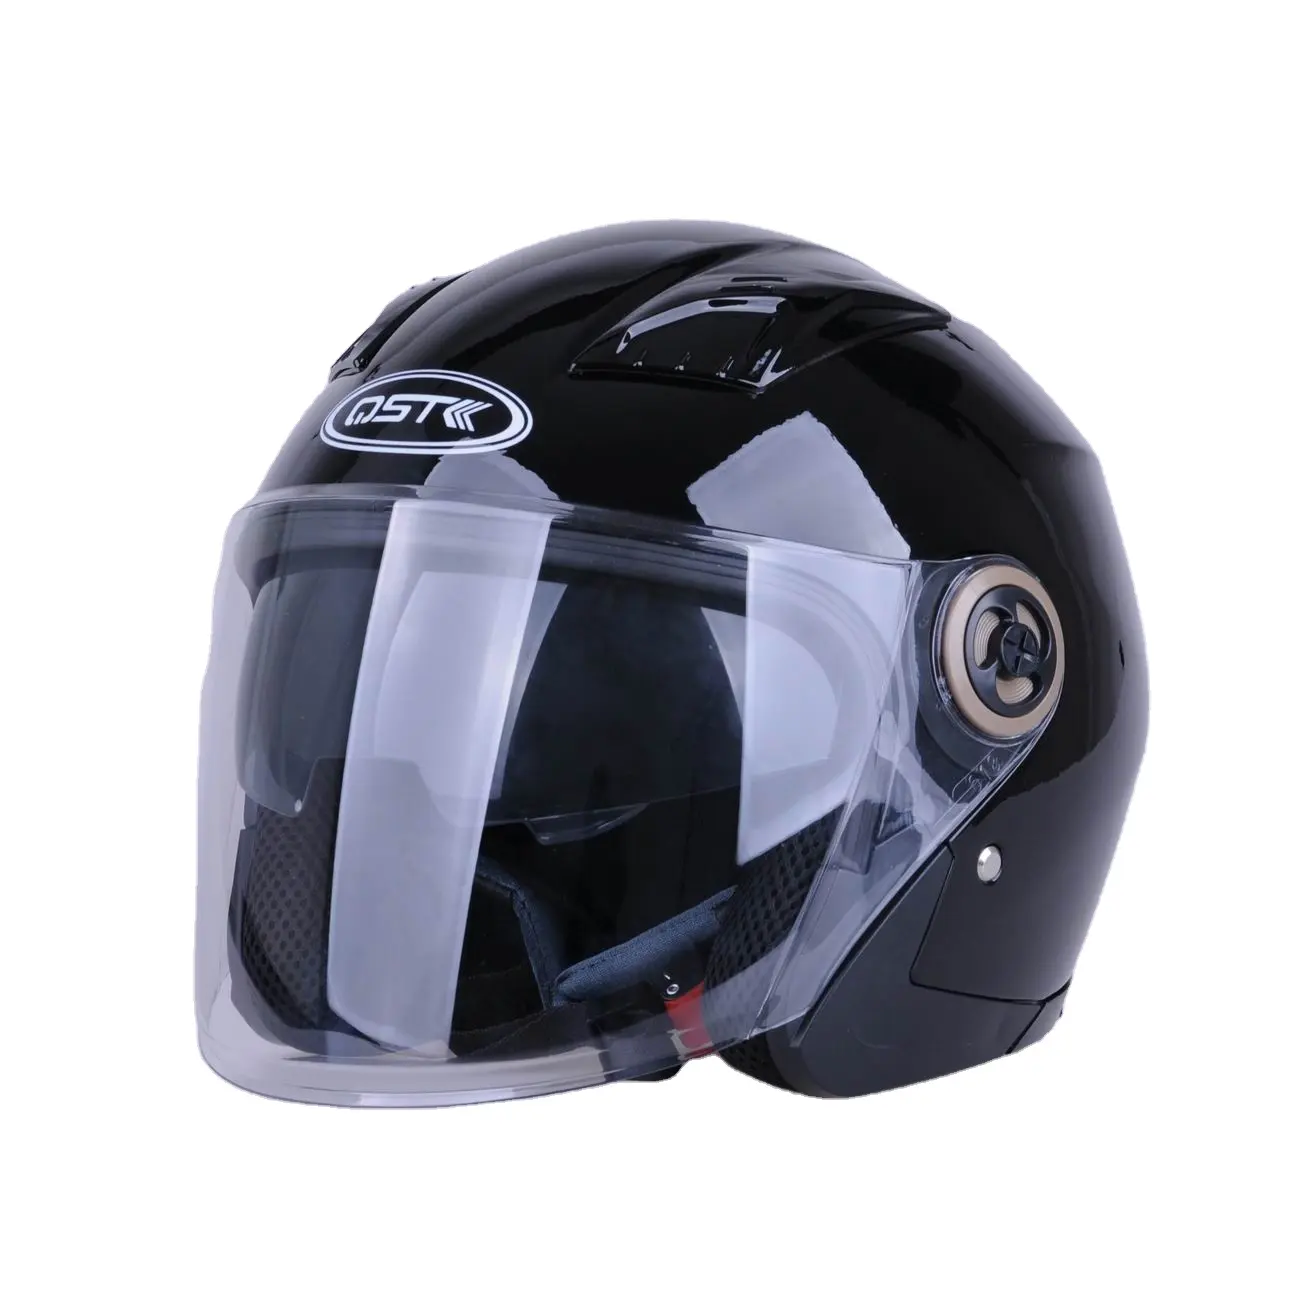 Ajustable Safety Bike Helmets Waterproof Smart Flash Helmet for Riding Electric Scooter Helmet Pink Motorcycle Black White Tidal